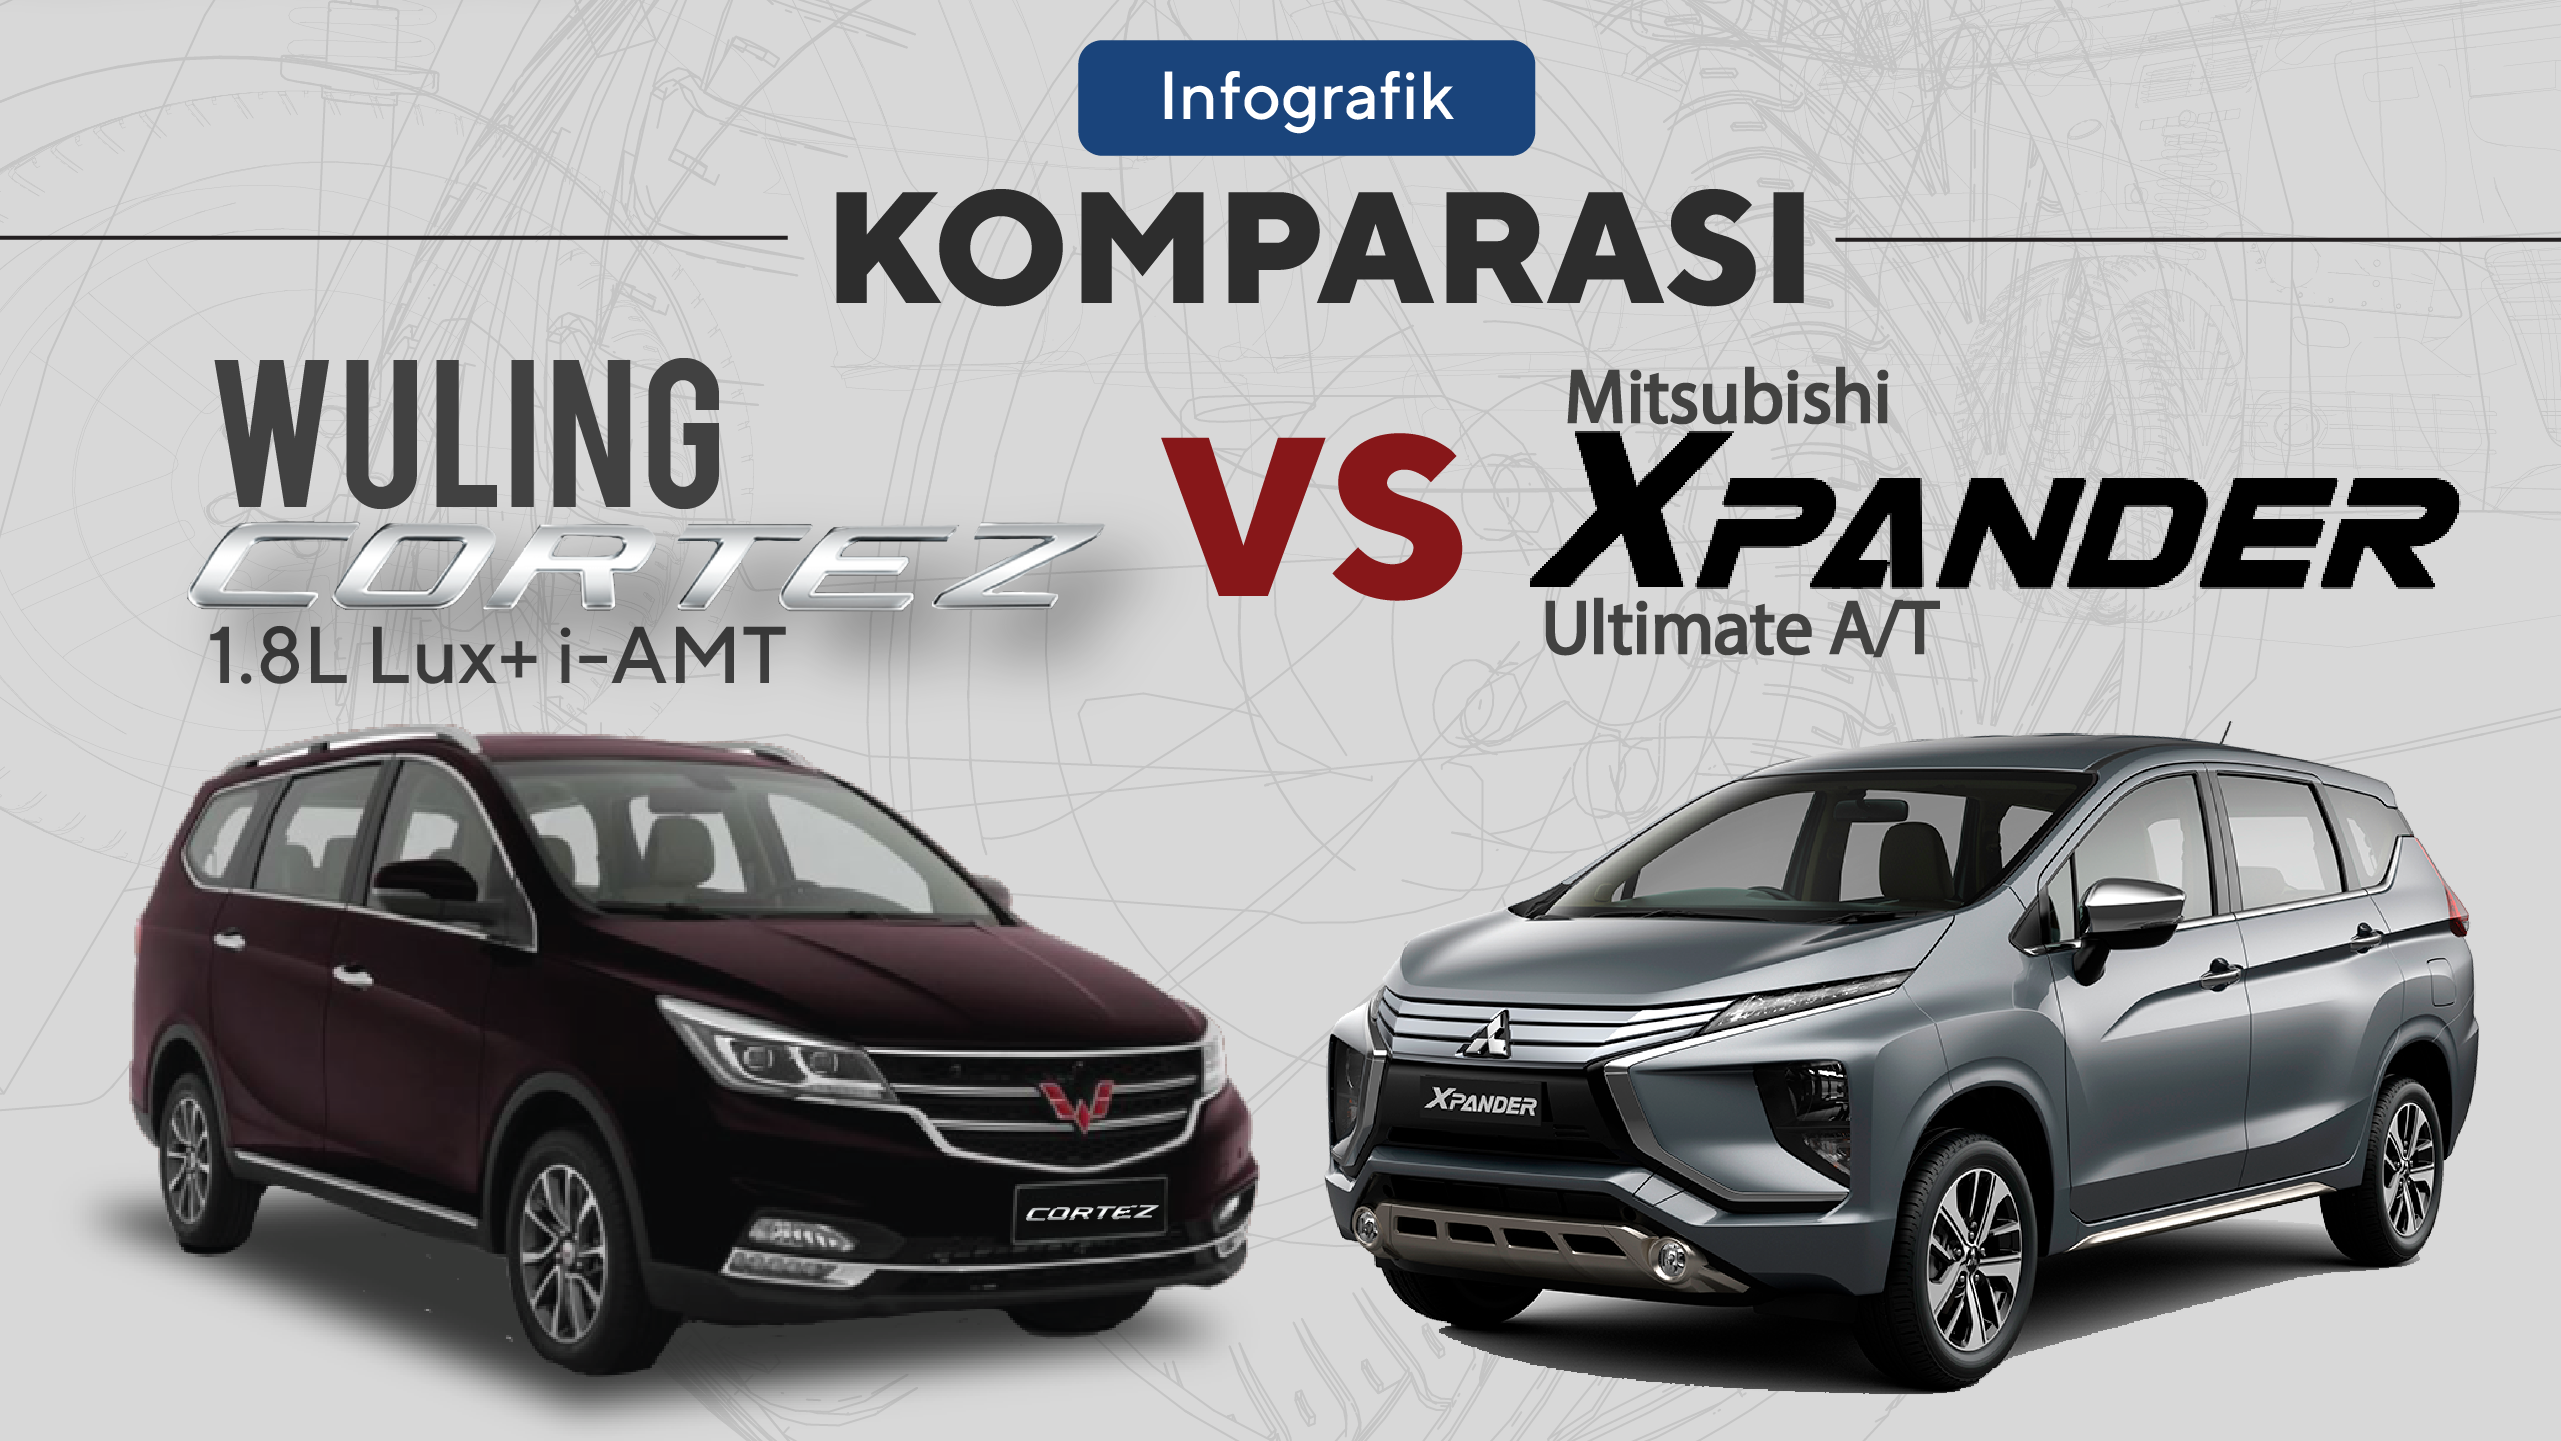 Infografik: Adu Fitur Mitsubishi Xpander vs Wuling Cortez